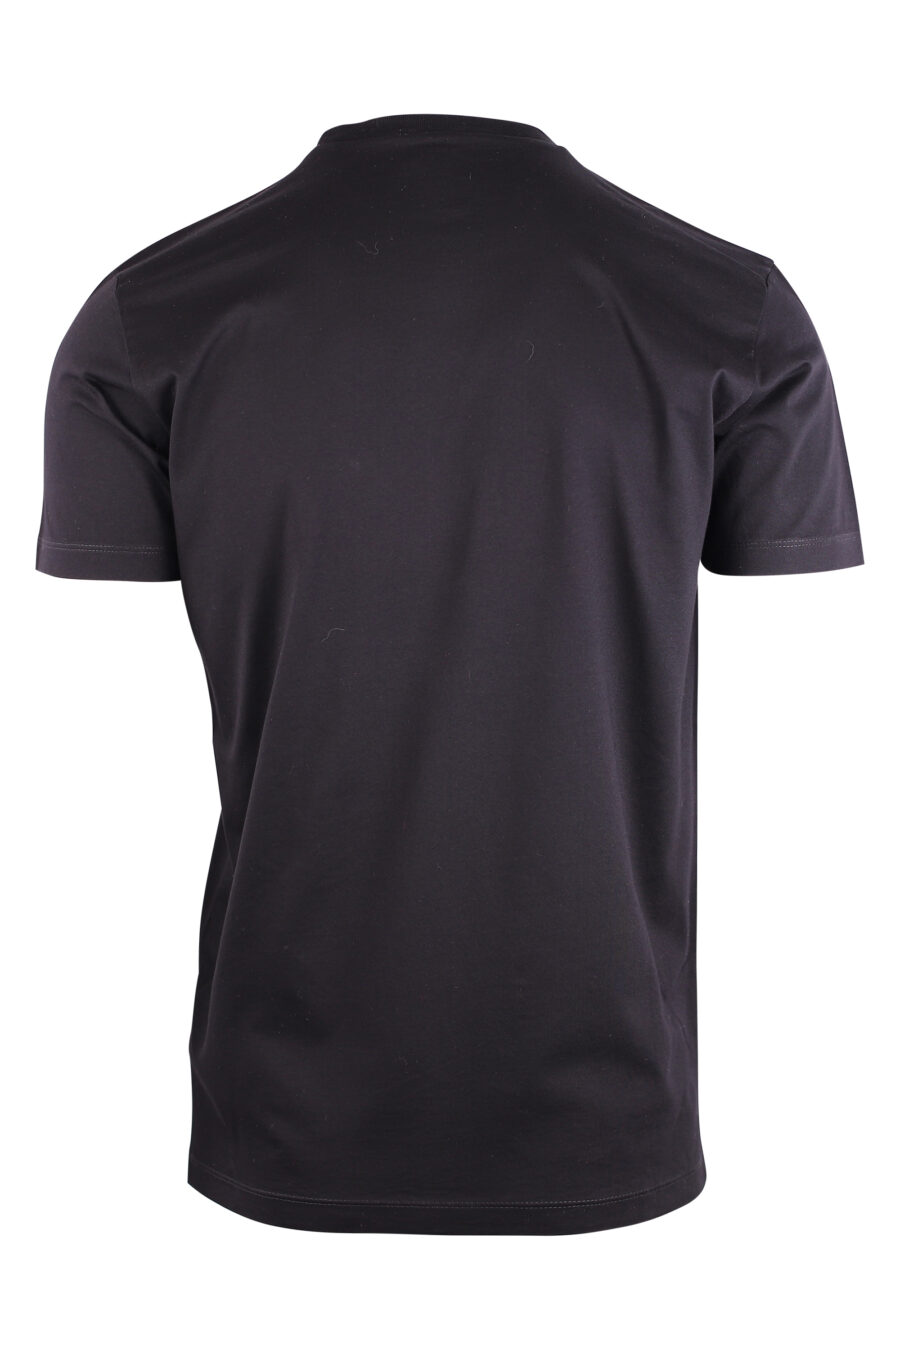 Black T-shirt with monochrome "ibra" logo - IMG 3110